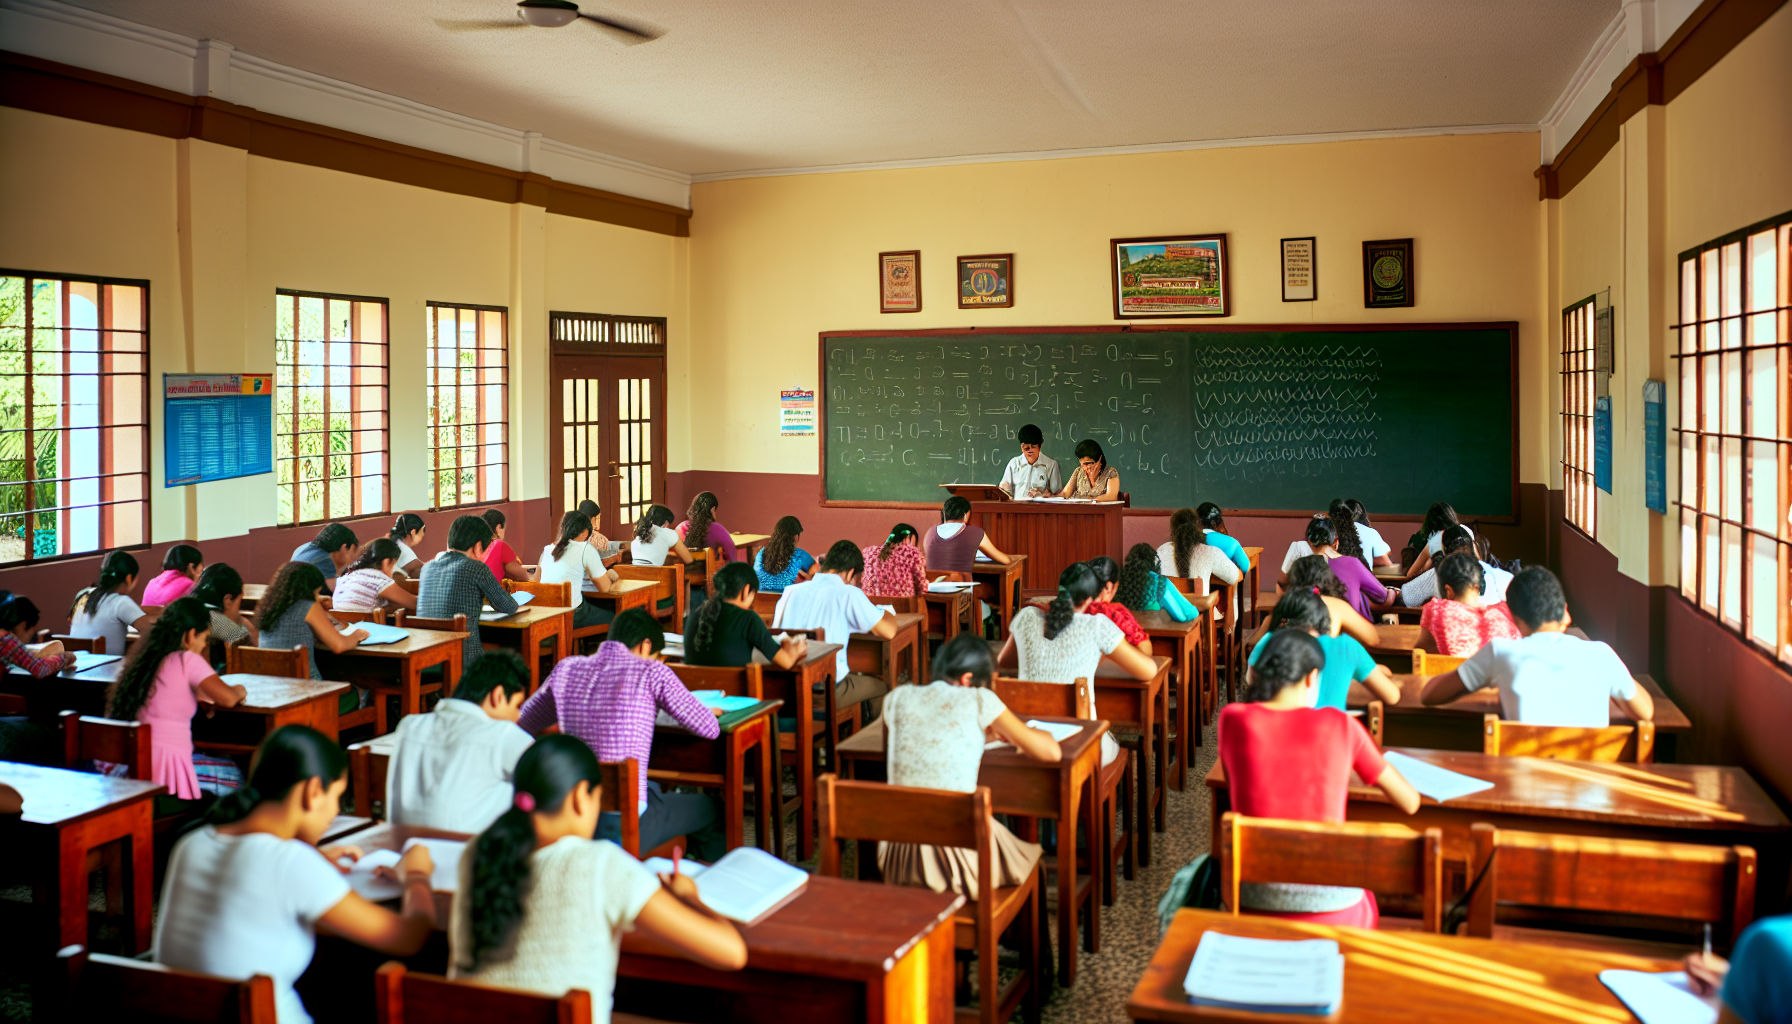 A classroom setting in a public university